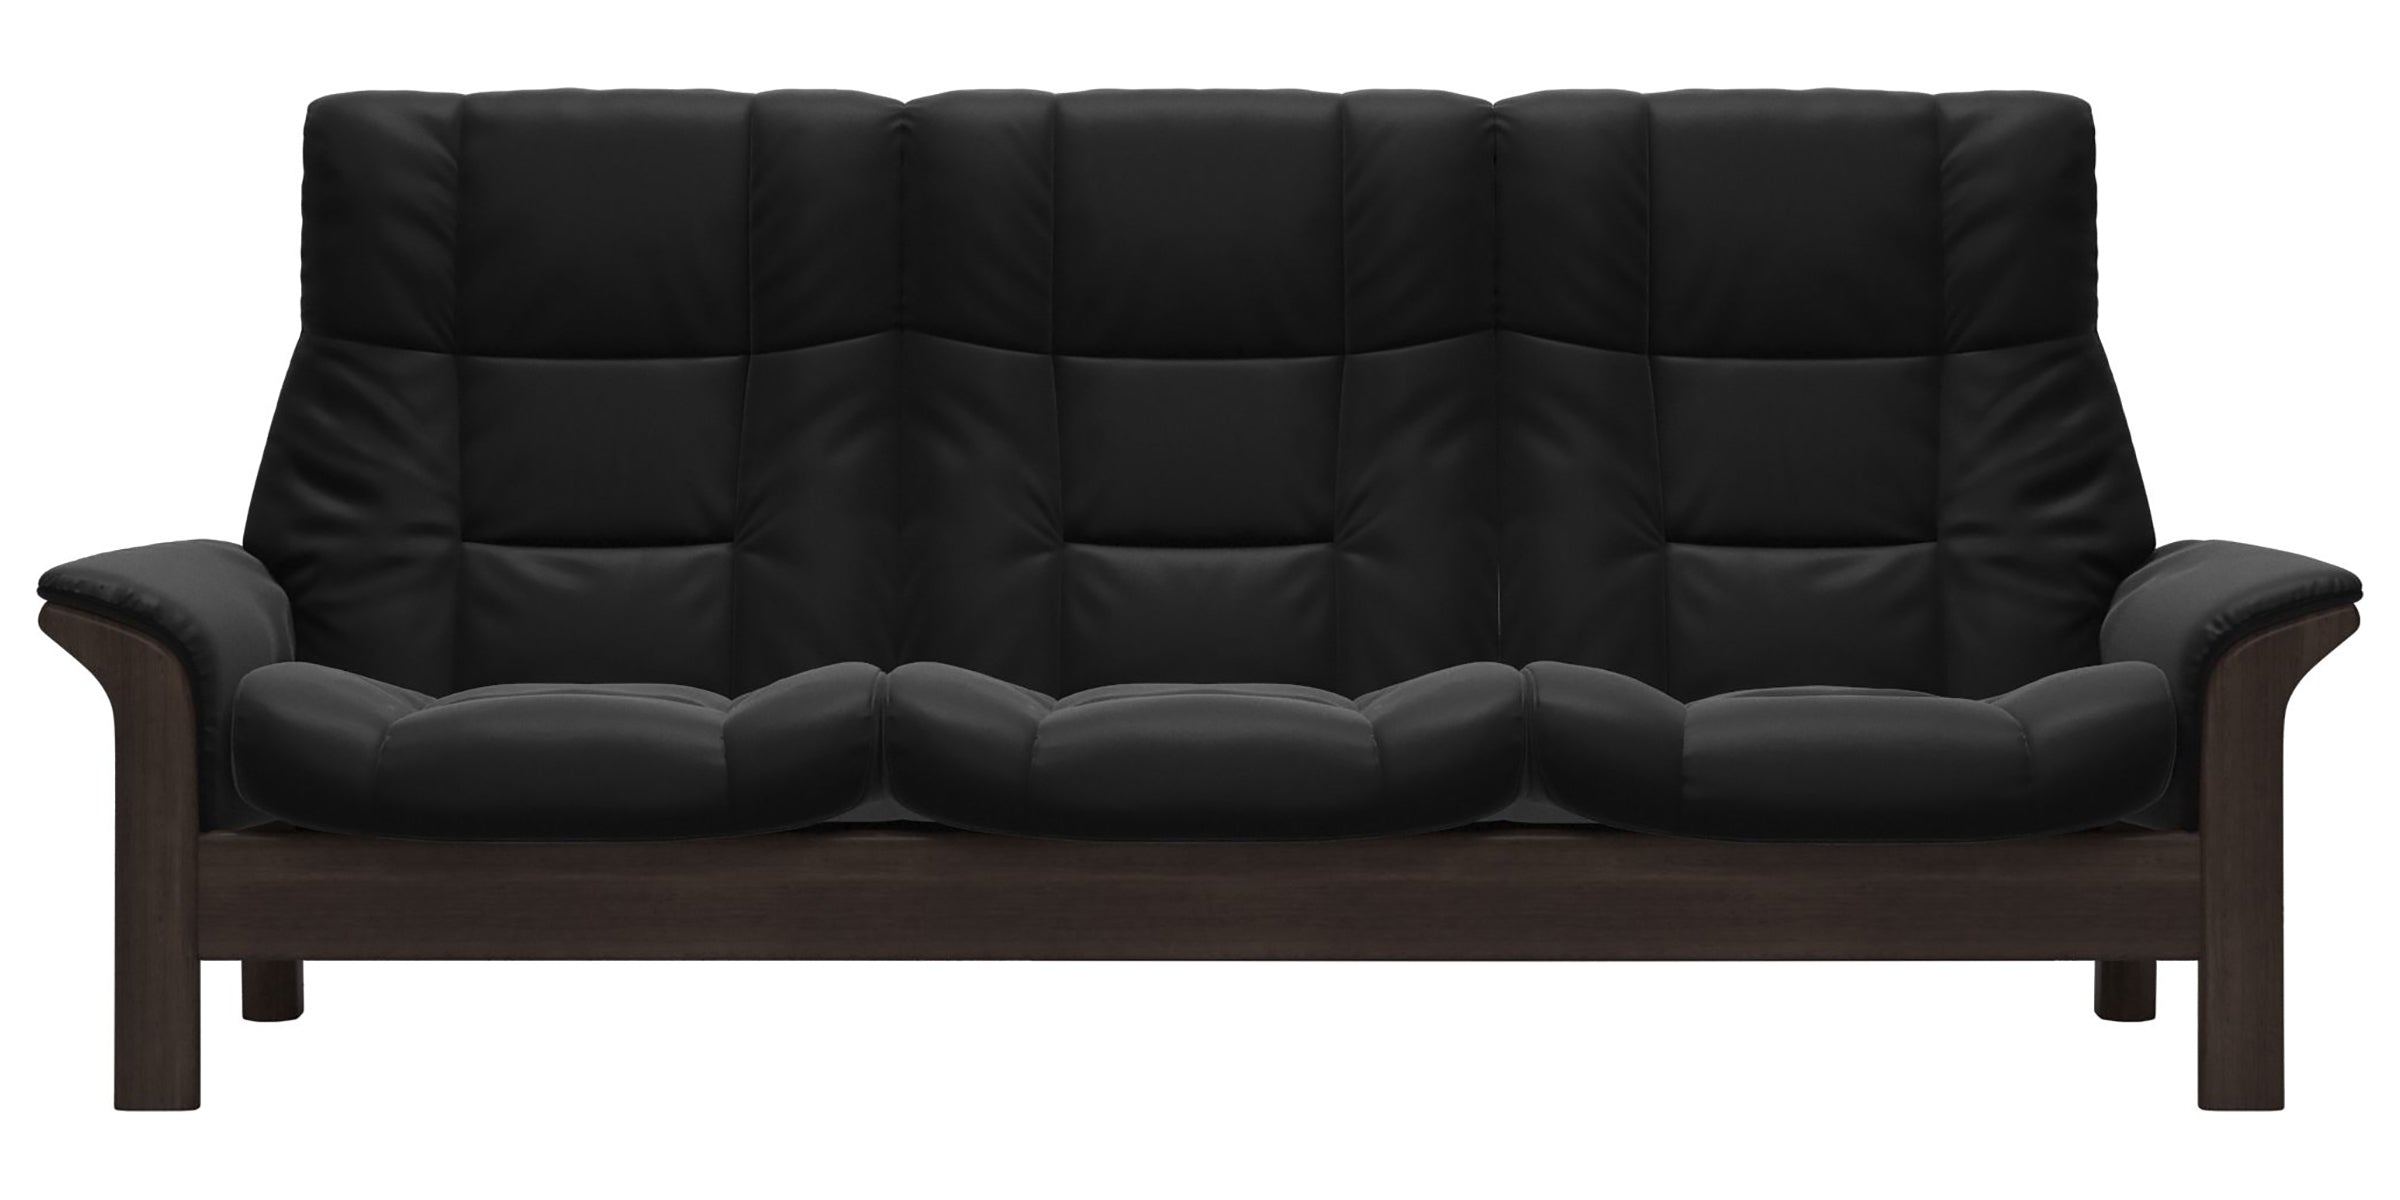 Paloma Leather Black and Wenge Base | Stressless Buckingham 3-Seater High Back Sofa | Valley Ridge Furniture